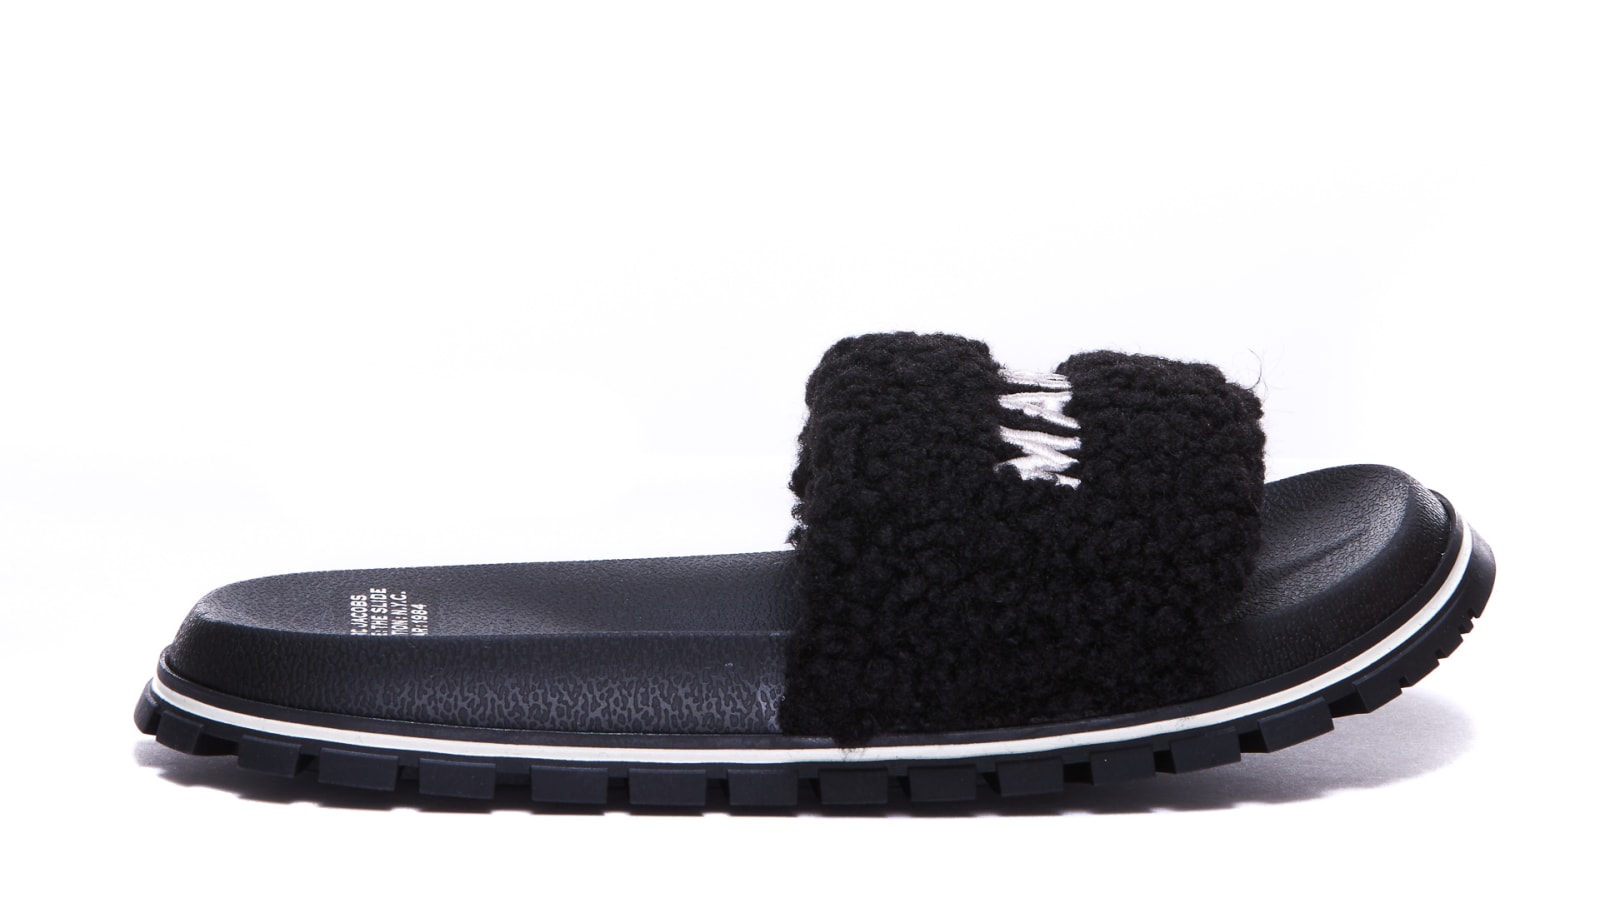 Marc Jacobs The Slide Sandals